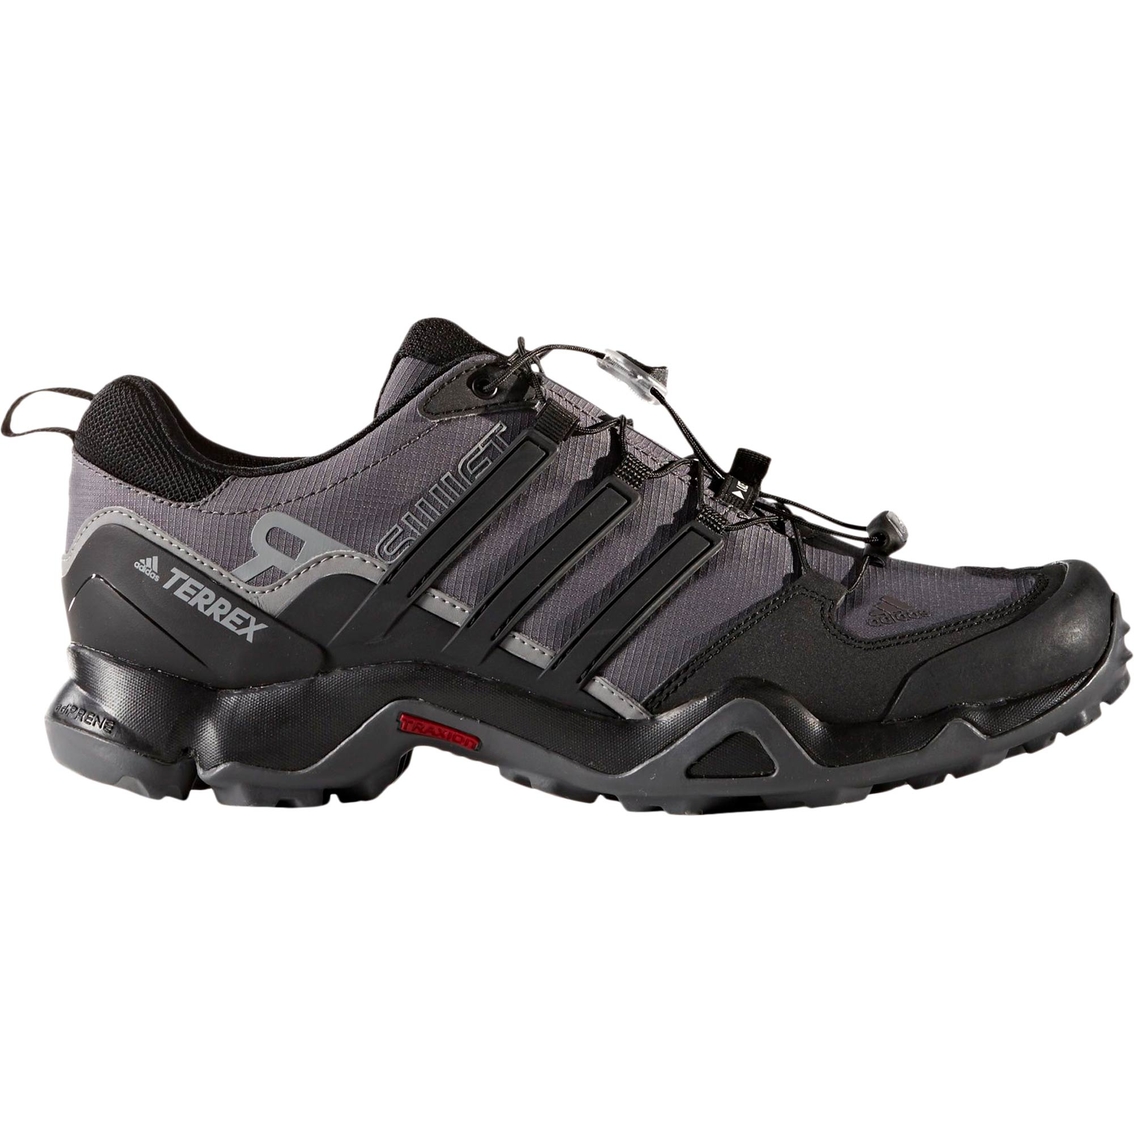 Adidas Outdoor Men's Terrex Swift R Trail Running Shoes | Hiking ...